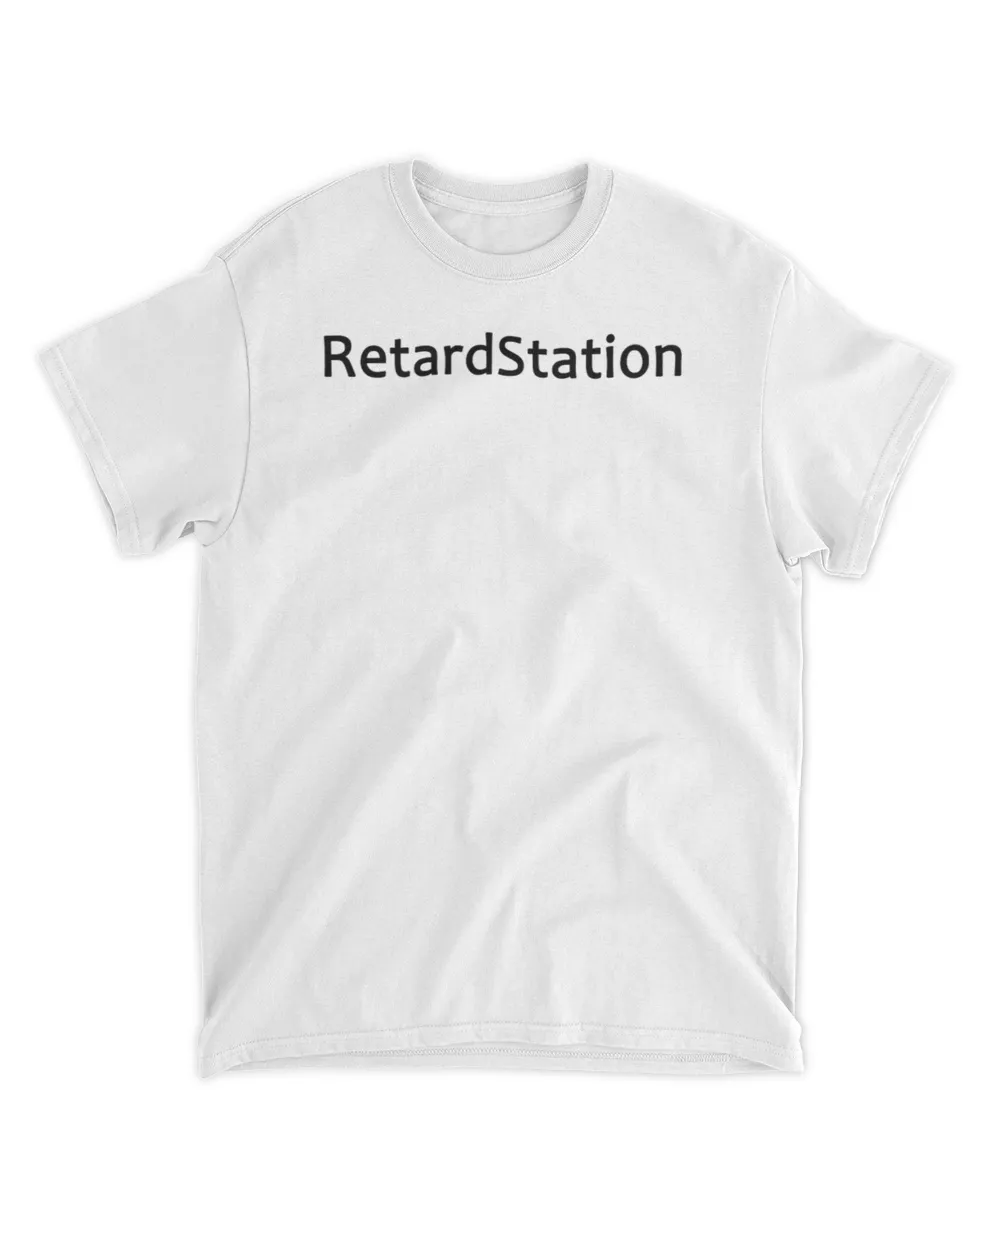  Retardstation shirt